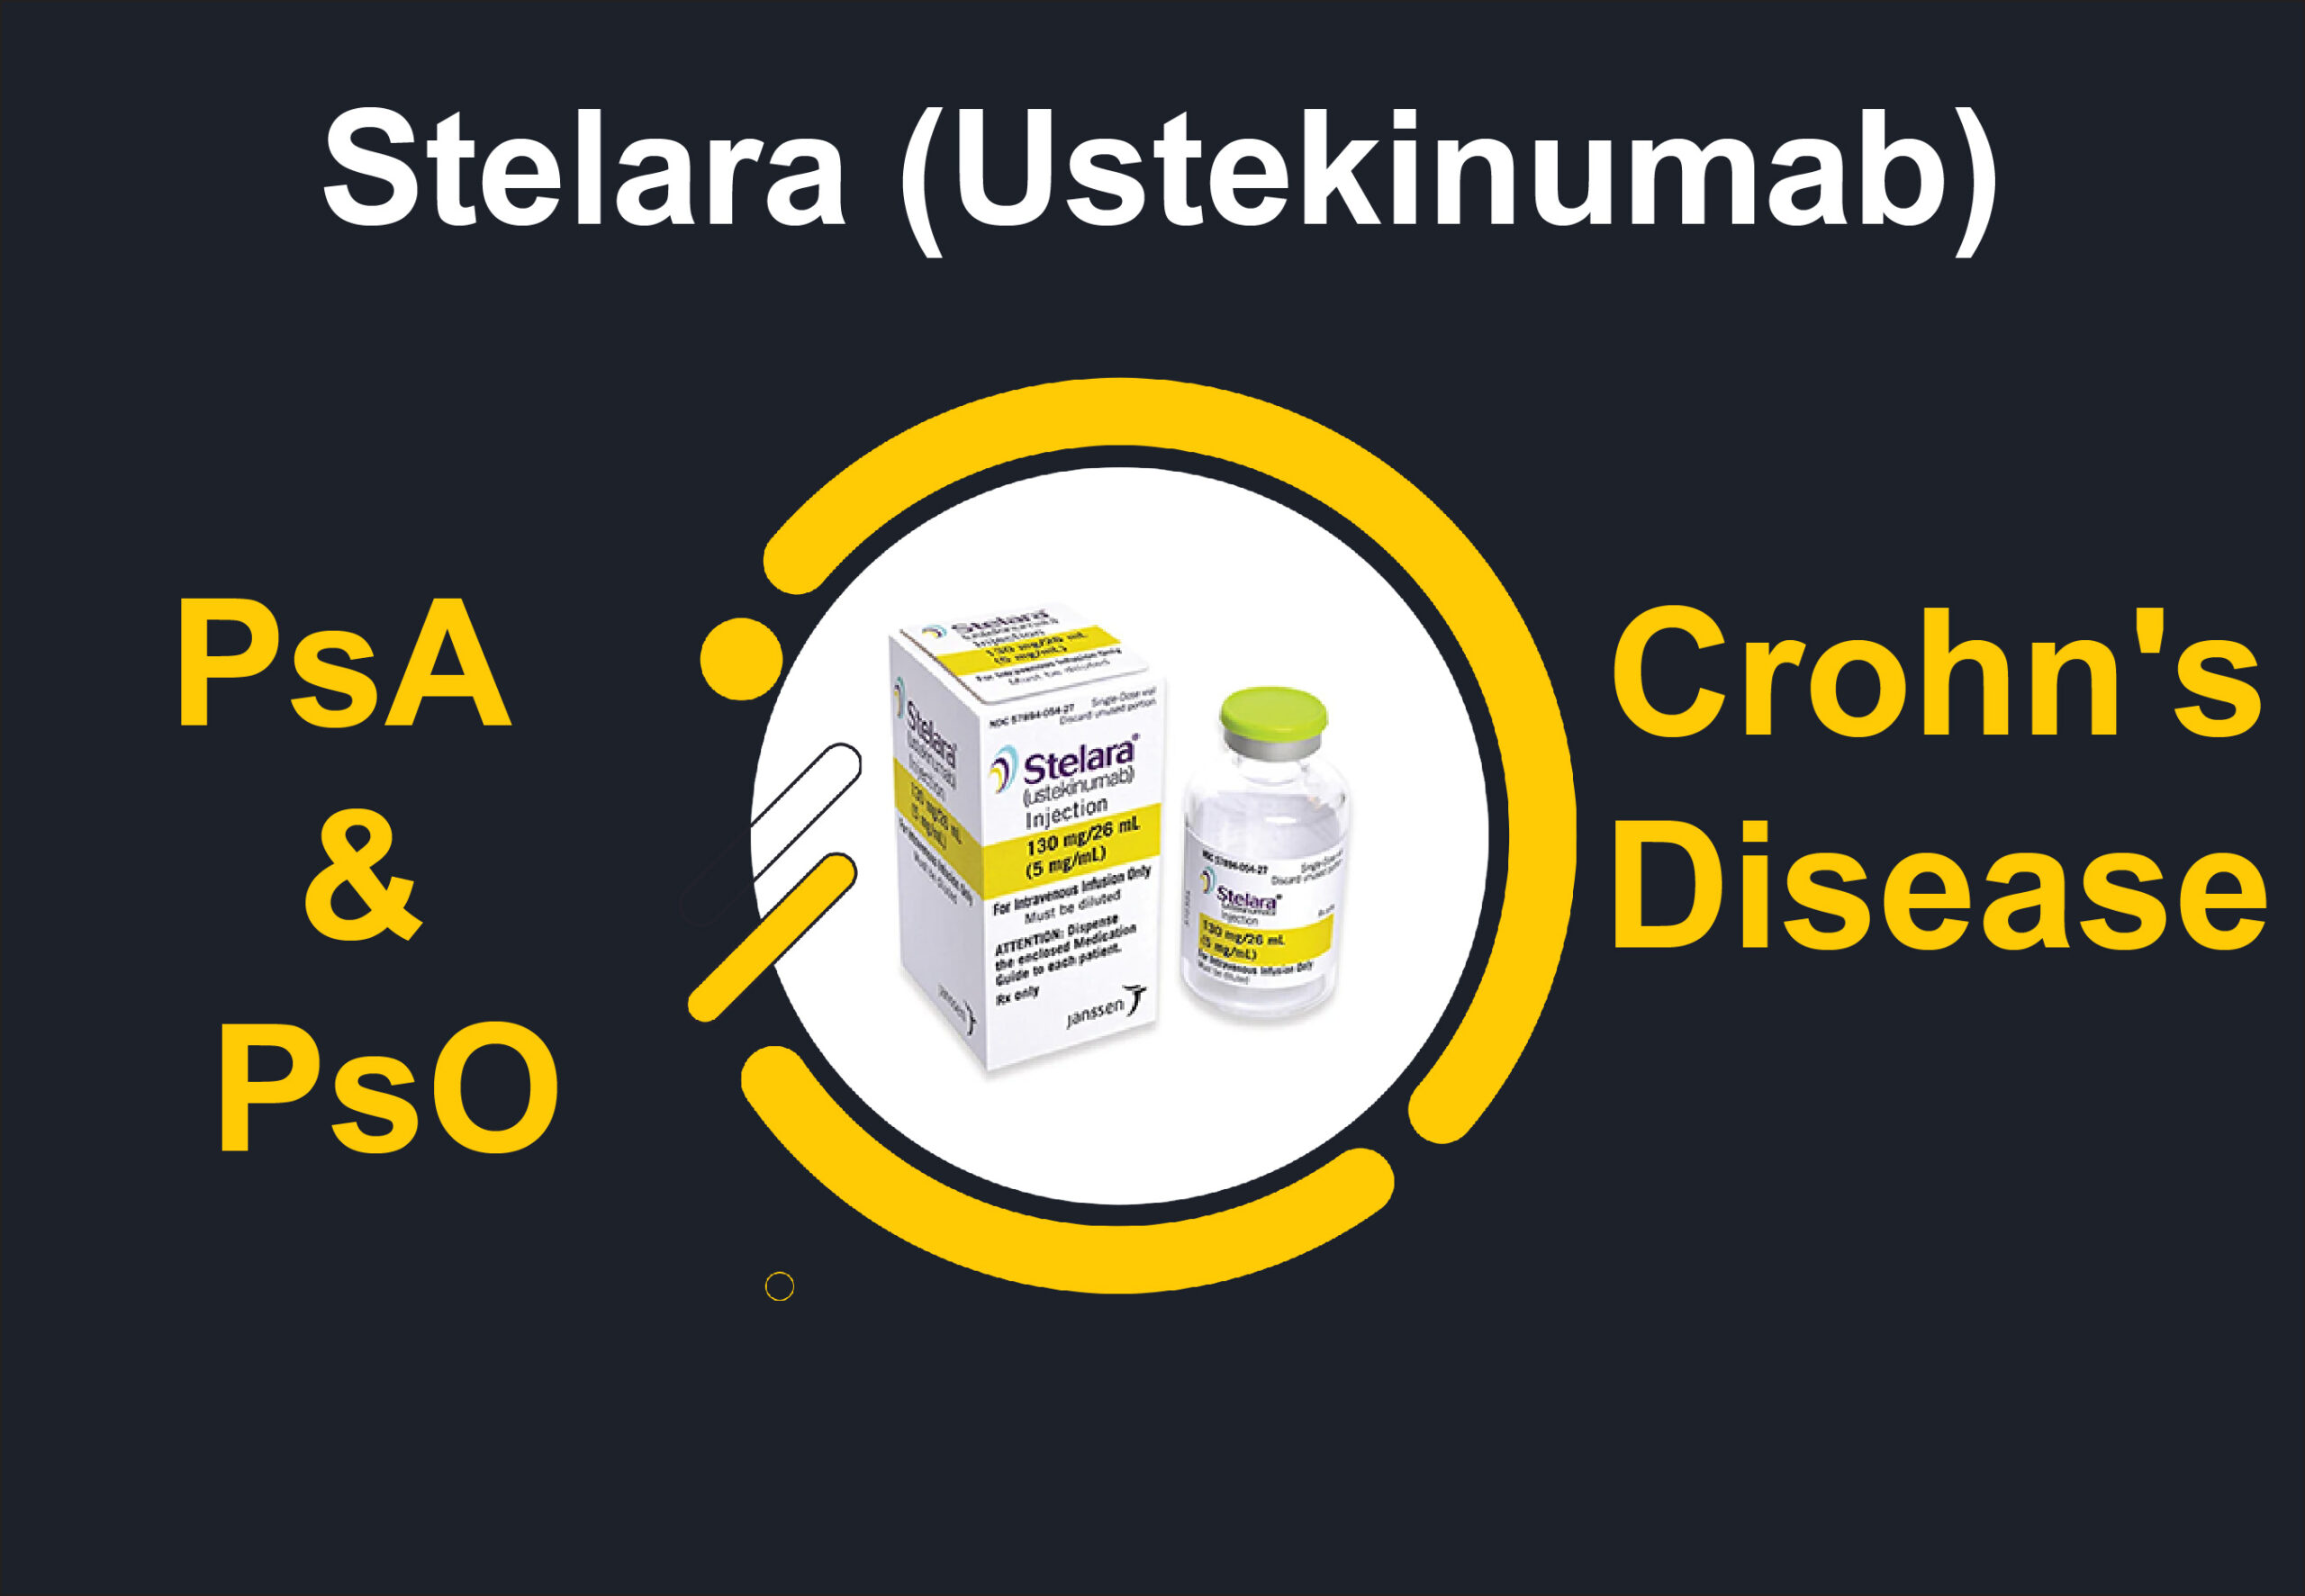 Stelara A Monoclonal Antibody for Crohn’s Disease, PsO & PsA Treatment